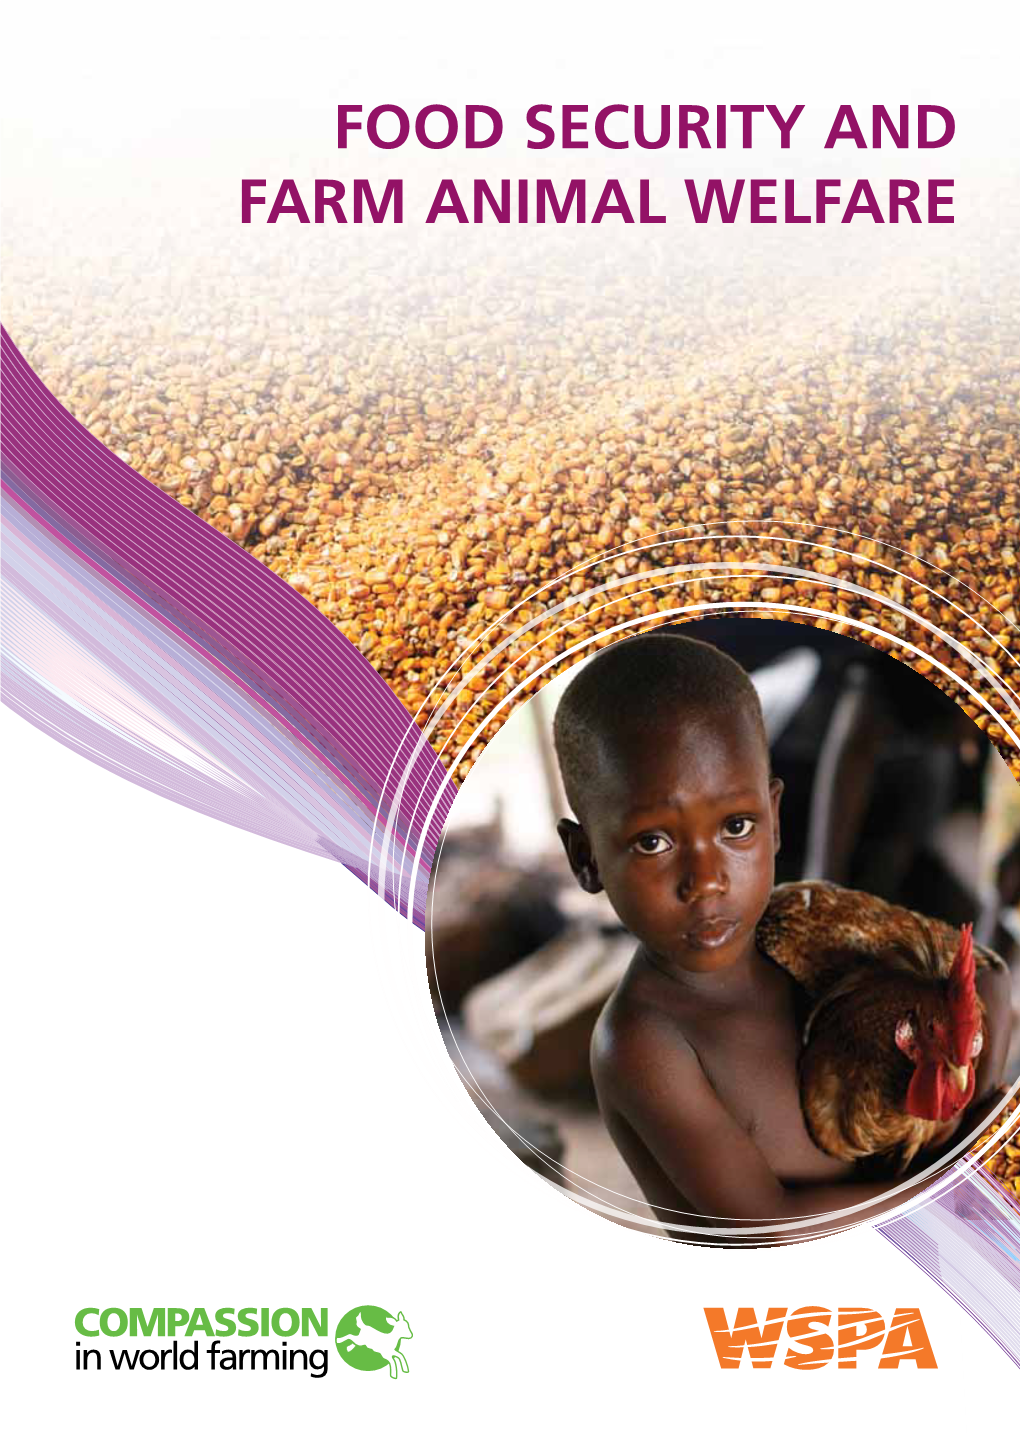 Food Security and Animal Welfare